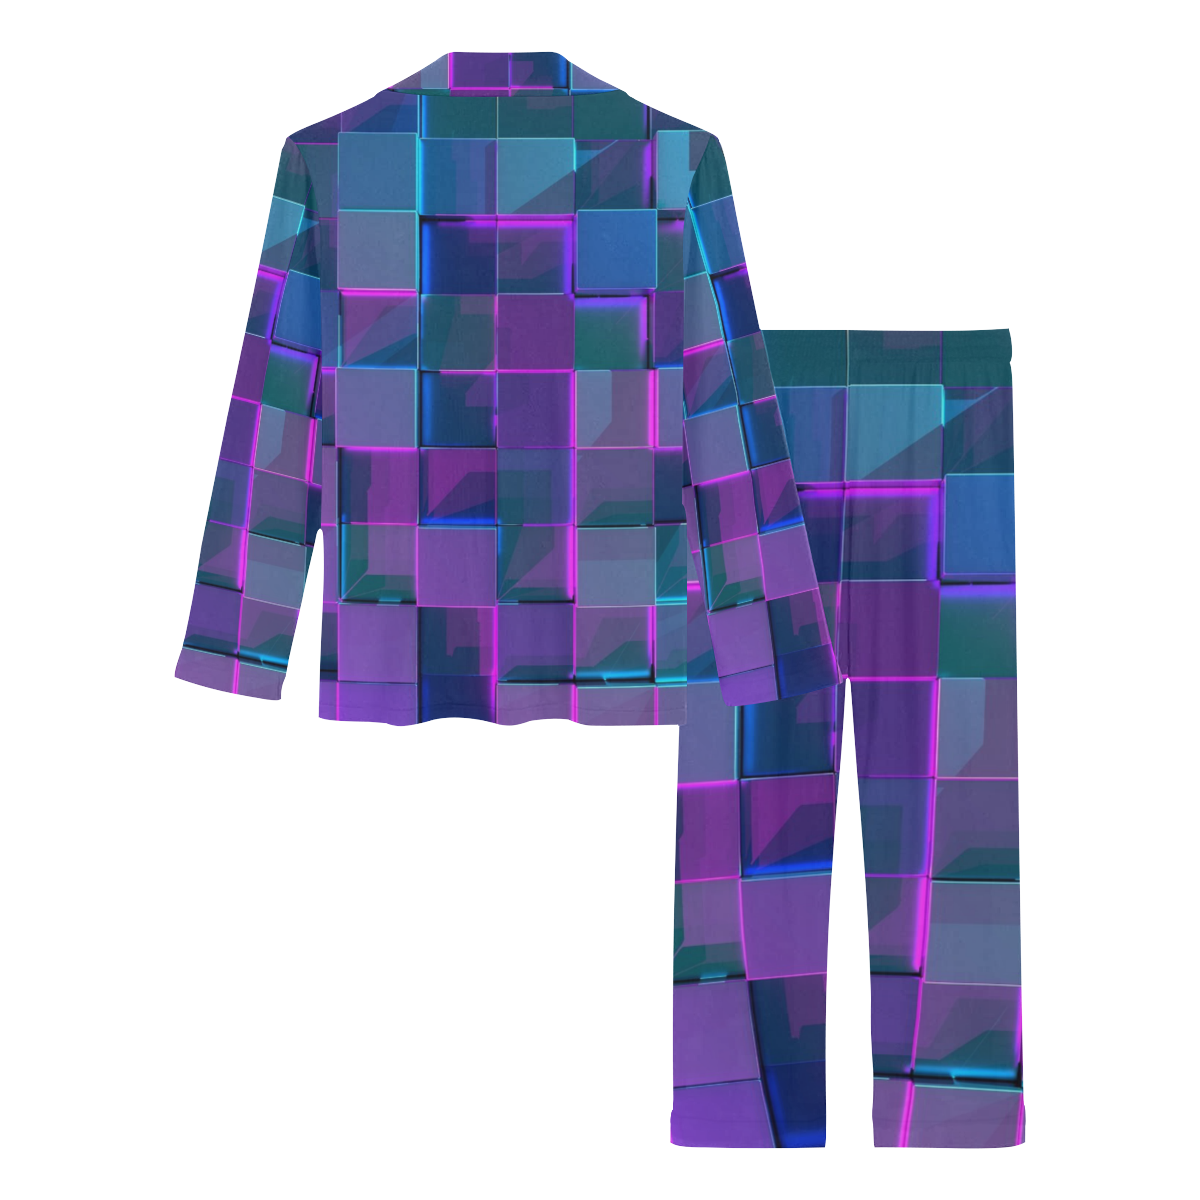 Prismic Glass Cubed Women's Long Pajama Set